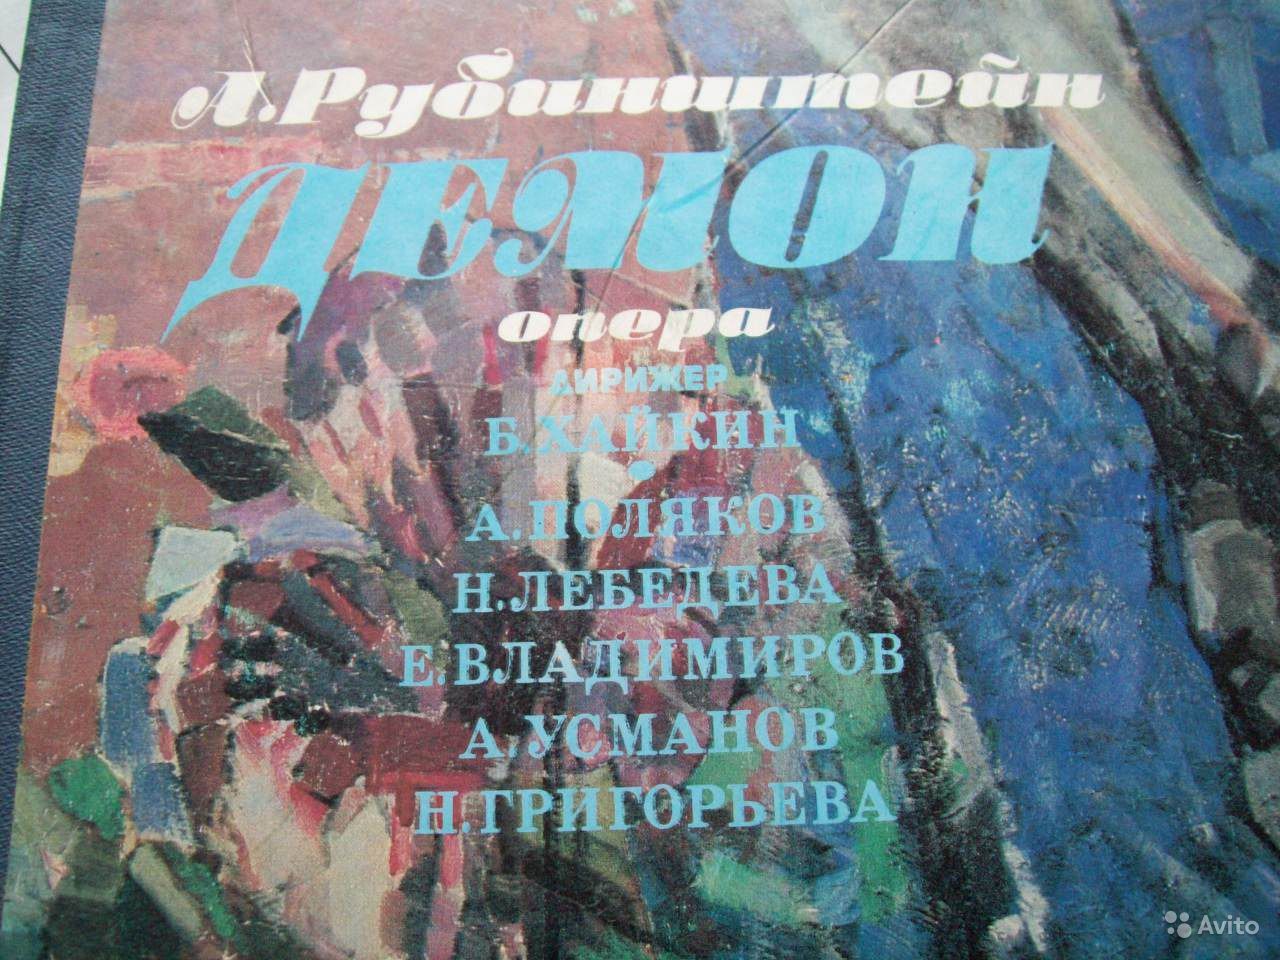 А. РУБИНШТЕЙН (1829-1894): «Демон», опера в трех действиях с прологом